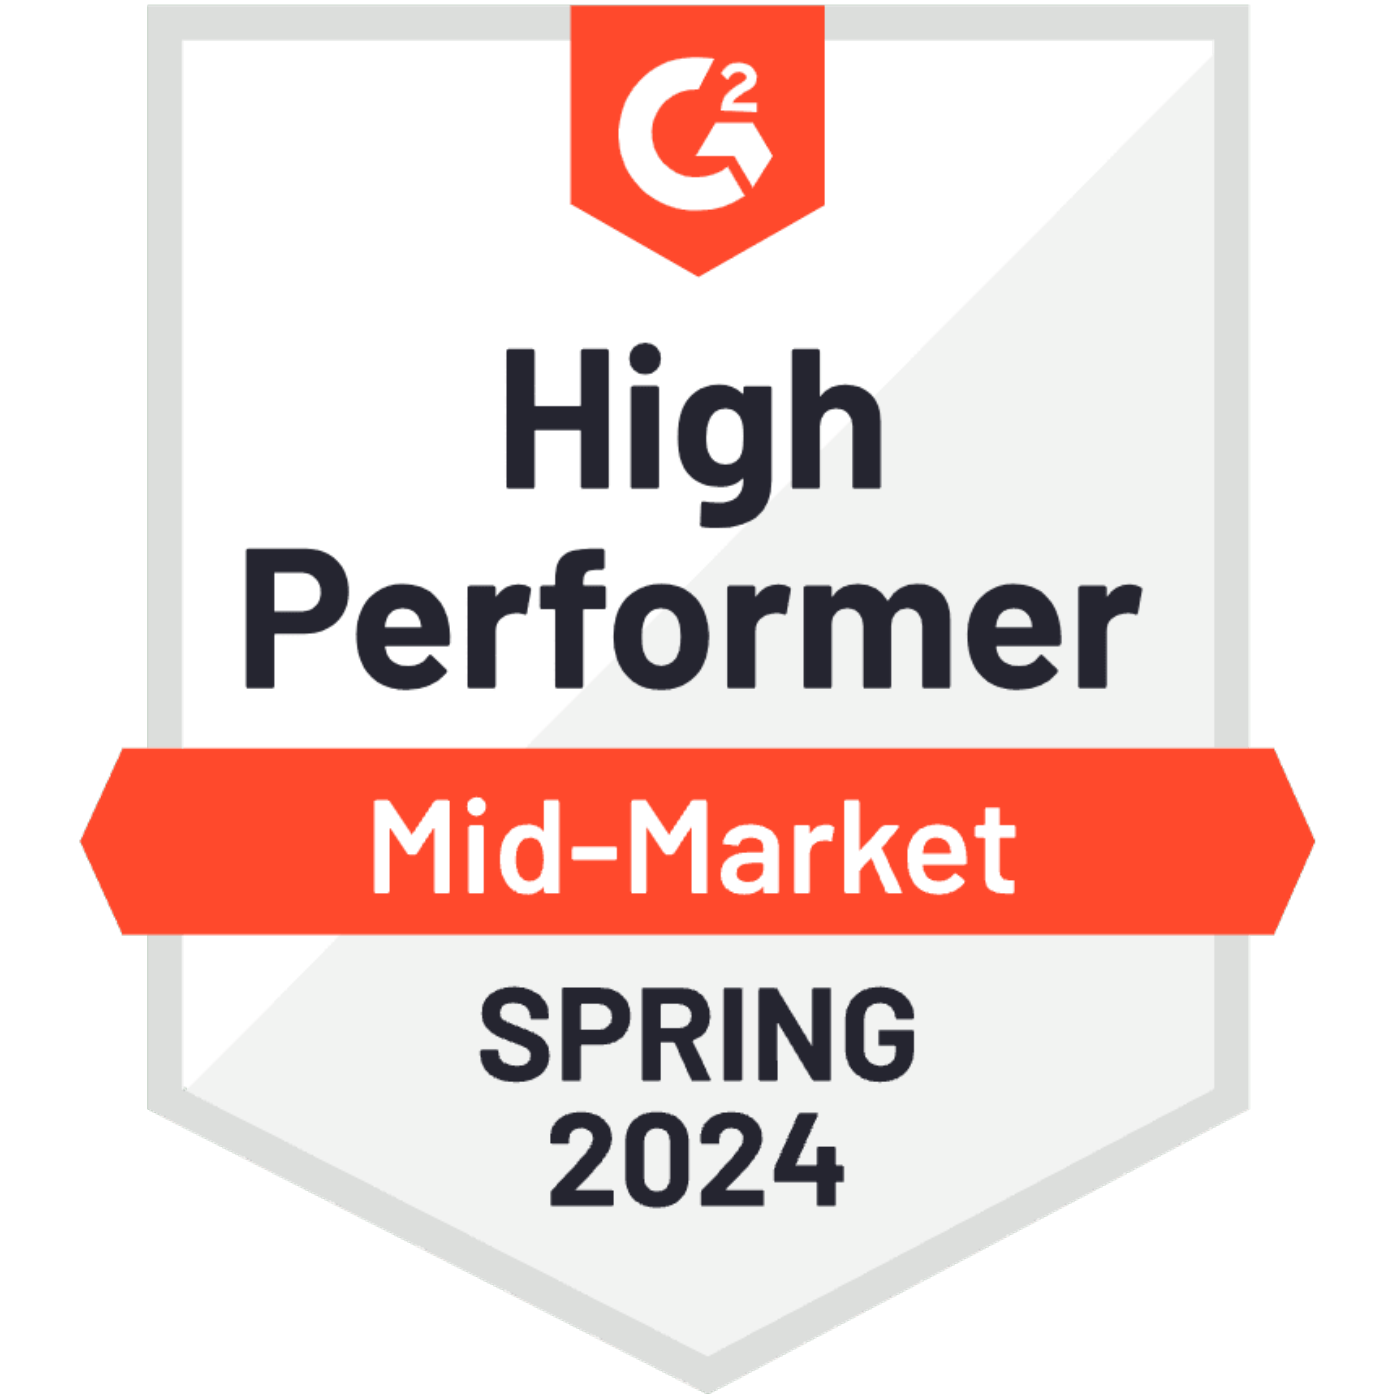 G2_High_Performer_Mid_Market_Spring_2024_600_600